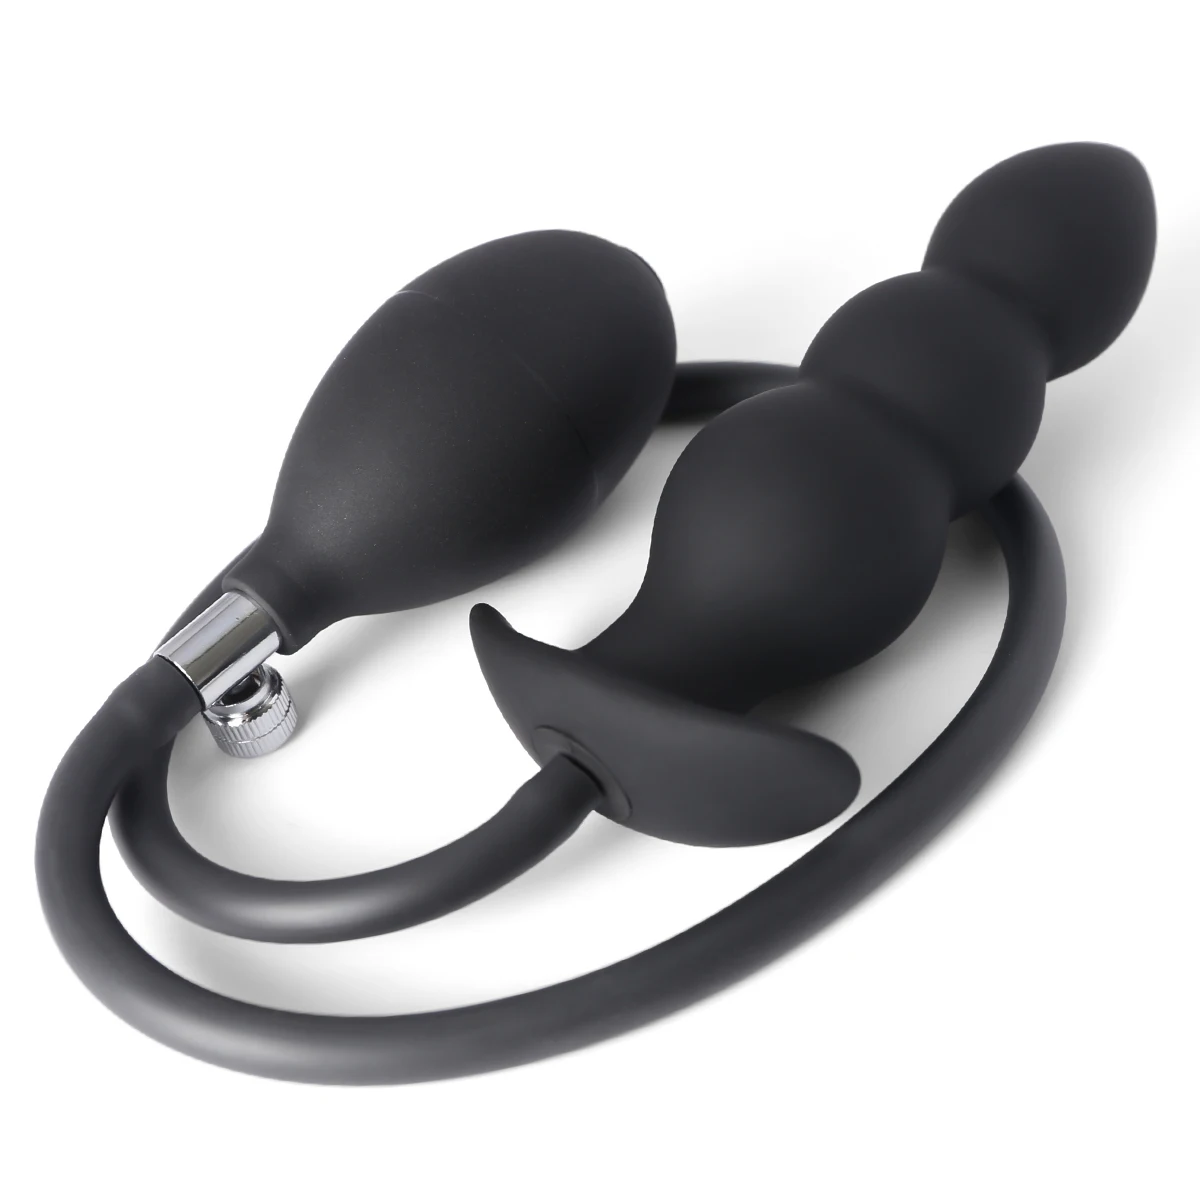 BDSM Inflatable Anal Plug Anal Expander Butt Plug Dilator G Spot Stimulator Prostate Massager Sex Toys игрушки для взрослых18